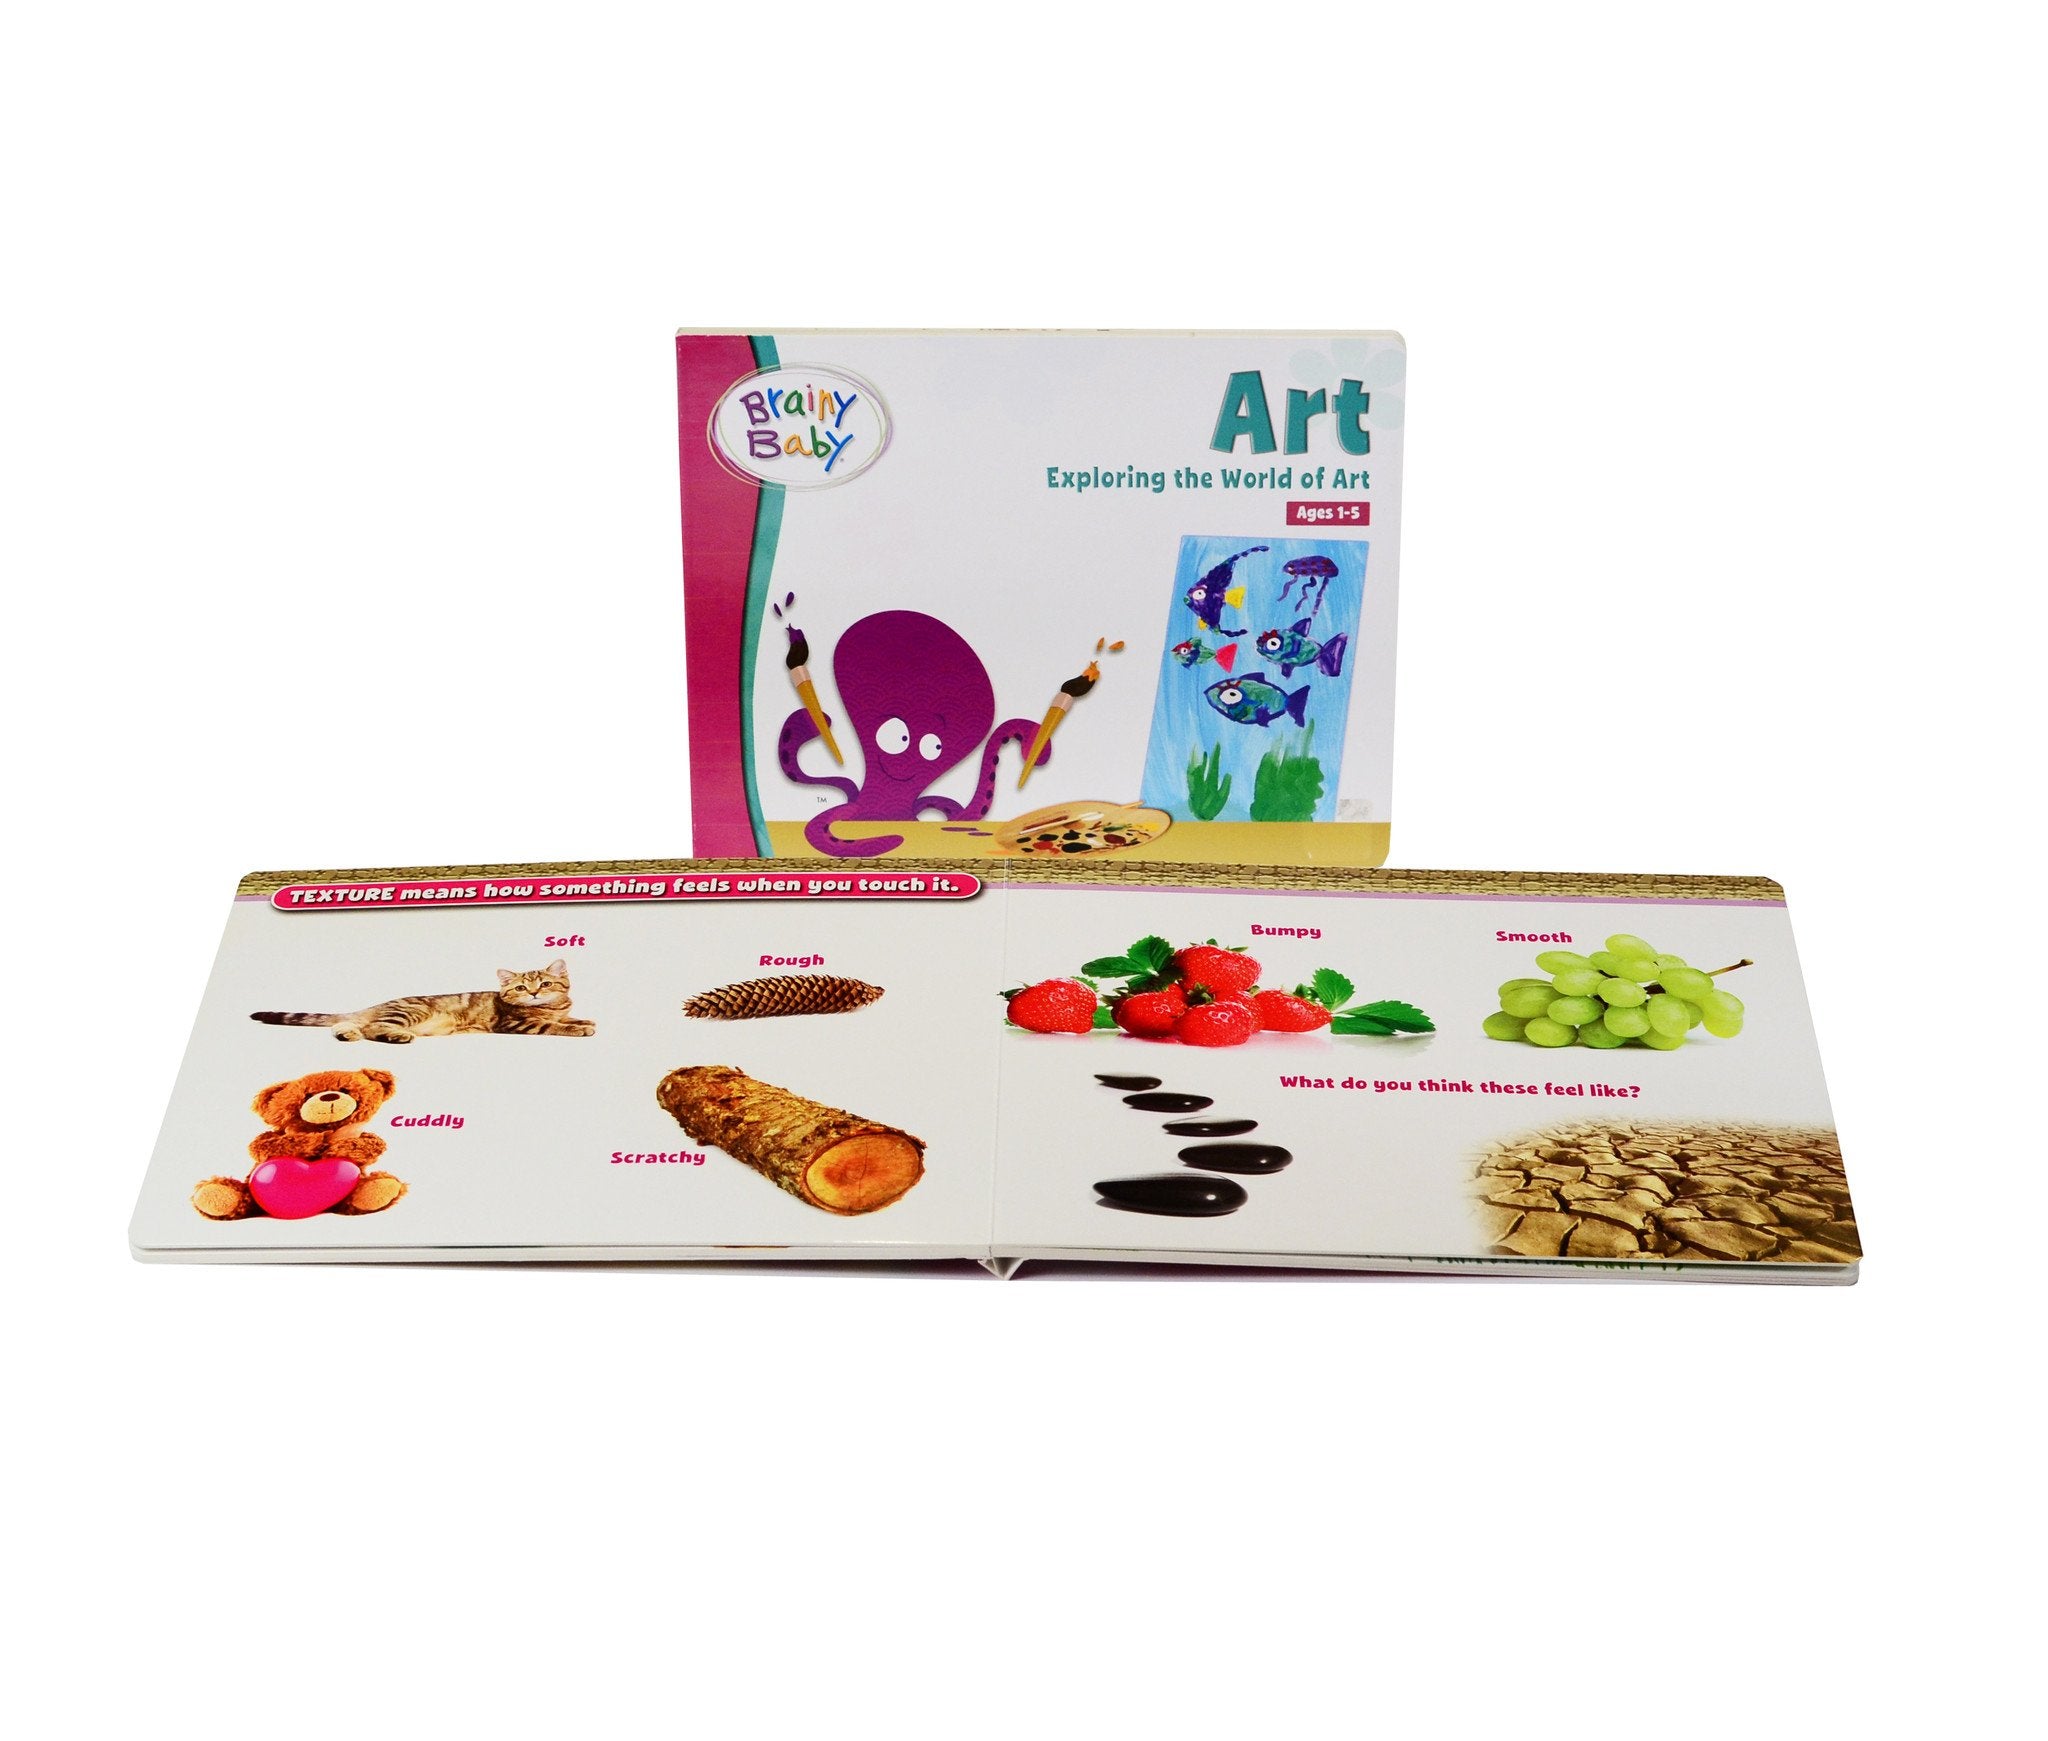 Brainy Baby Art Board Book Exploring the World of Art for Preschool Children